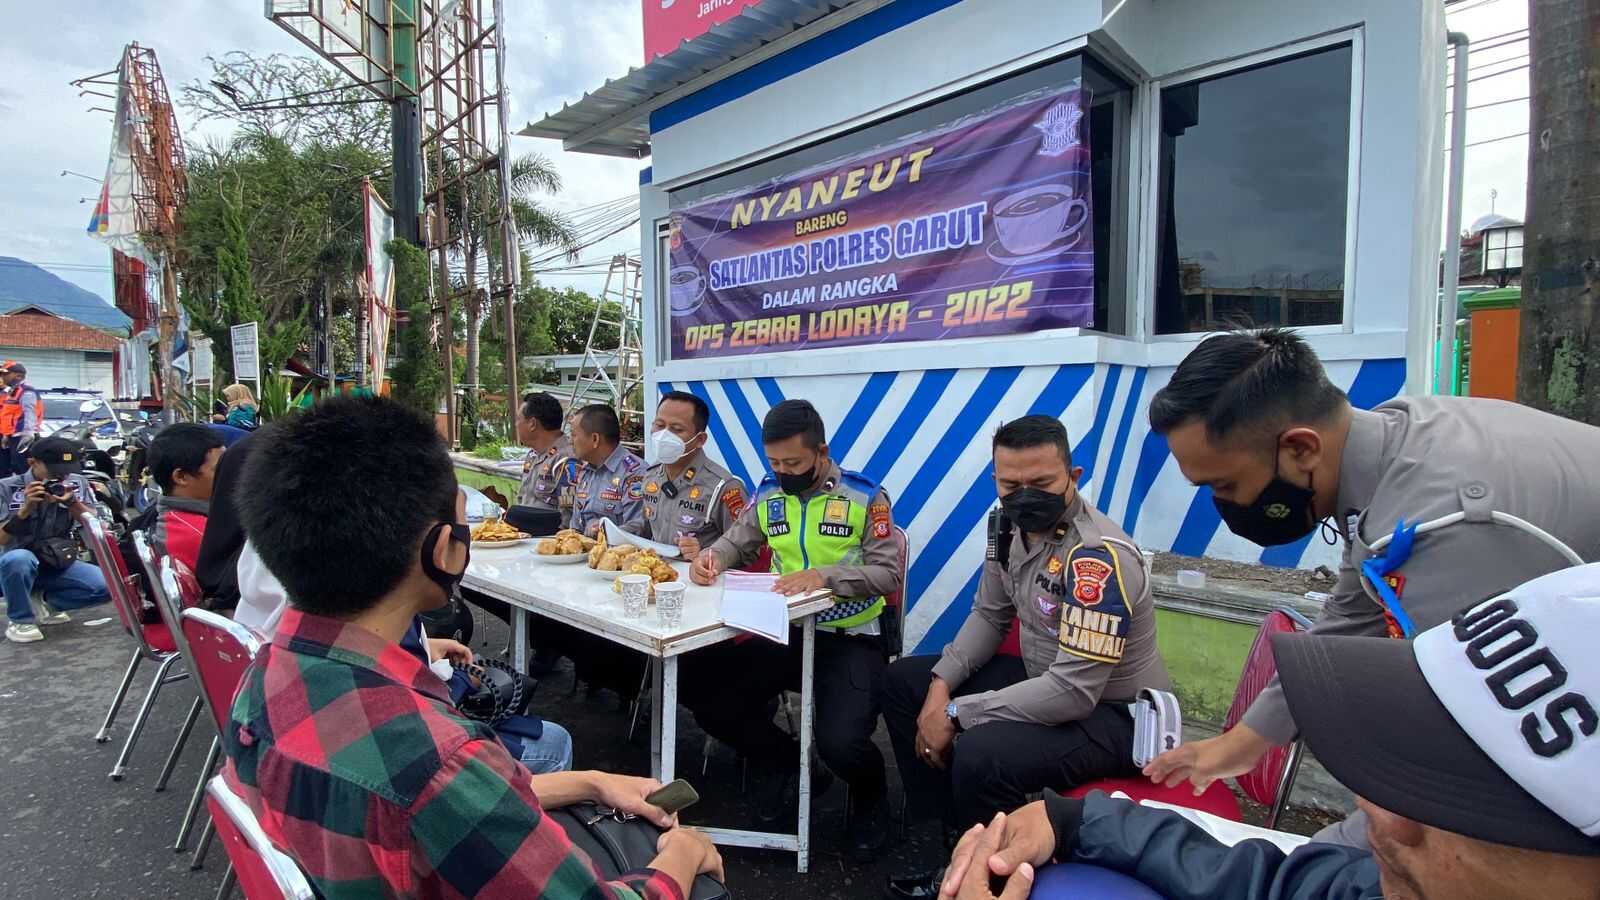 Polisi Ajak "Nyaneut" Pelanggar Lalu Lintas di Simpang Lima Garut, Disuguhi Gehu dan Bala-bala